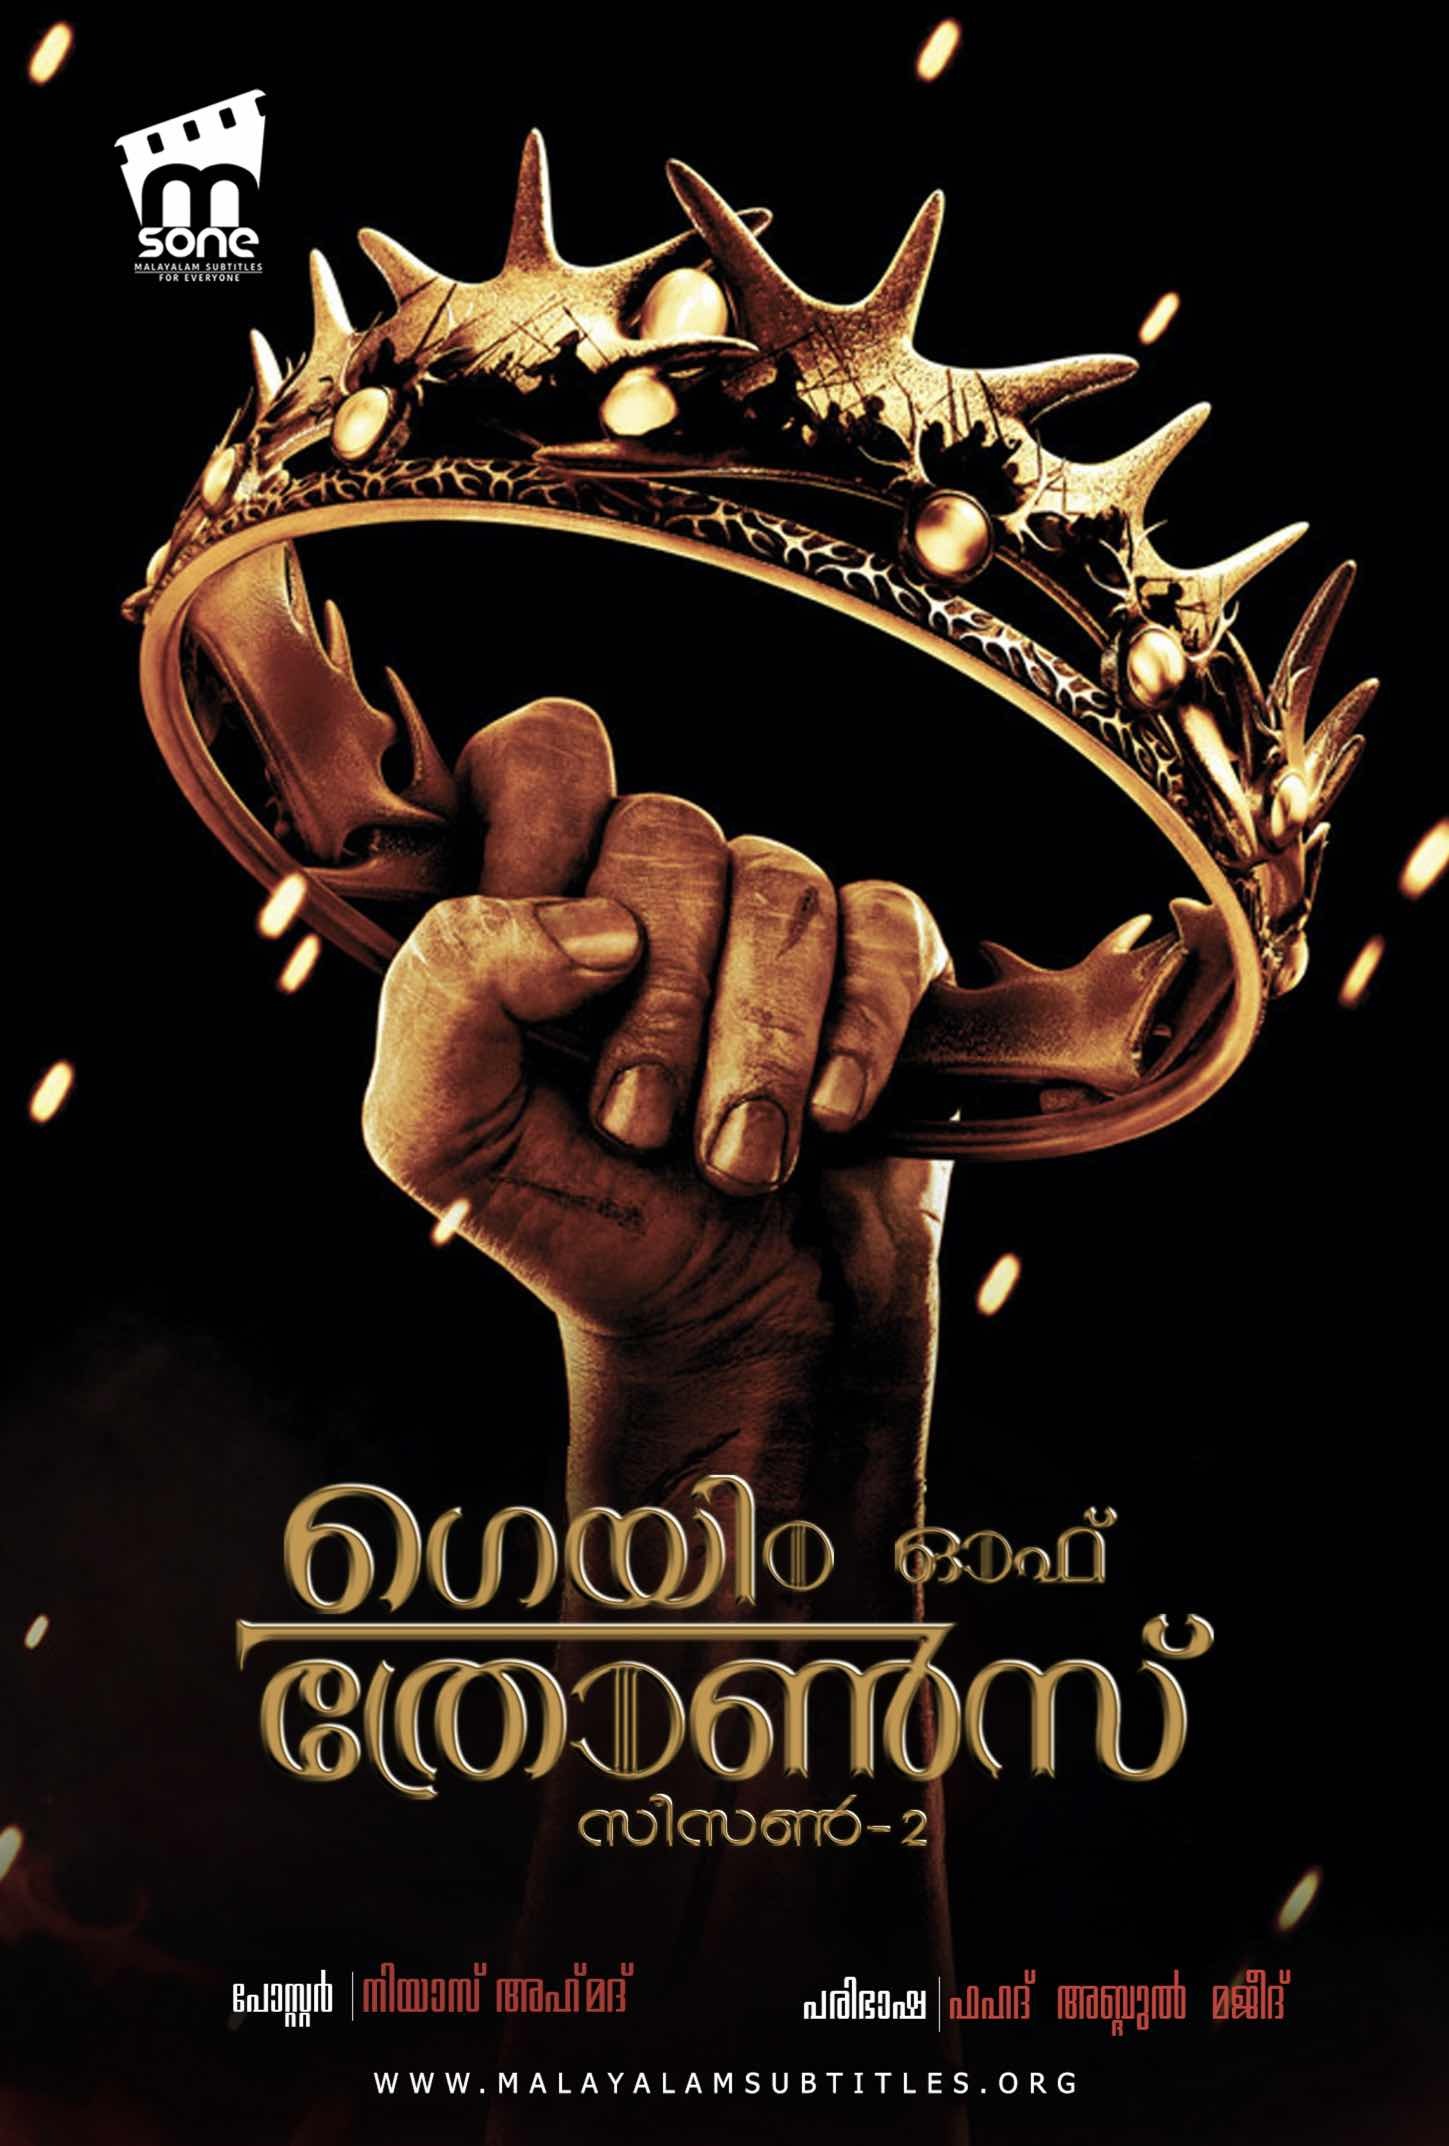 download game of thrones malayalam subtitle